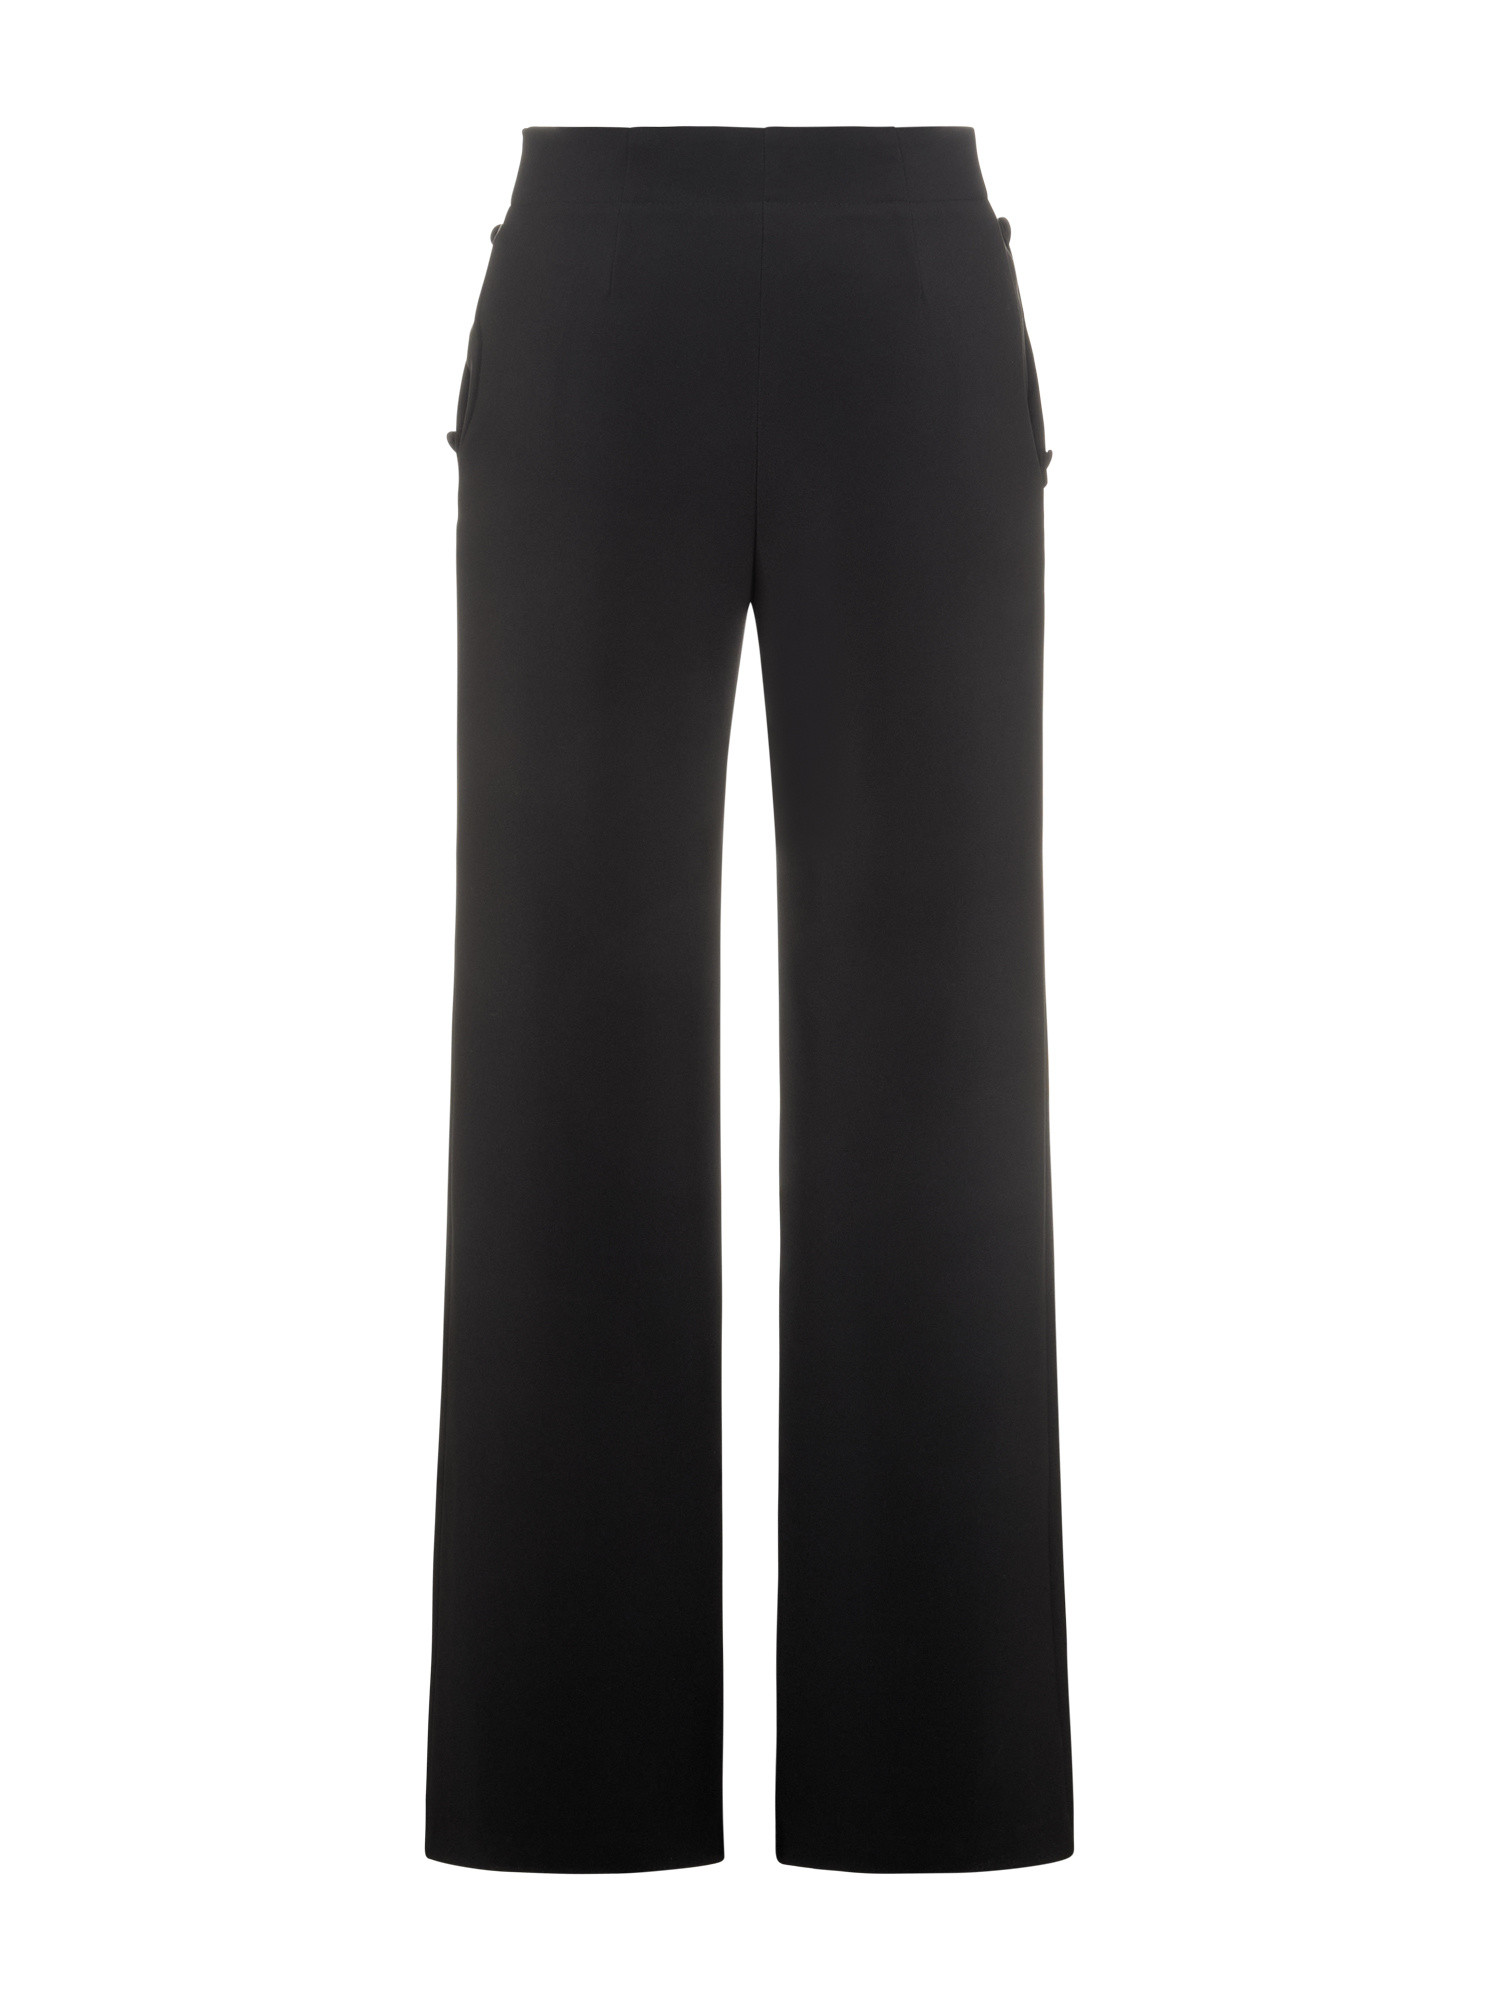 Koan - Wide leg trousers, Black, large image number 1